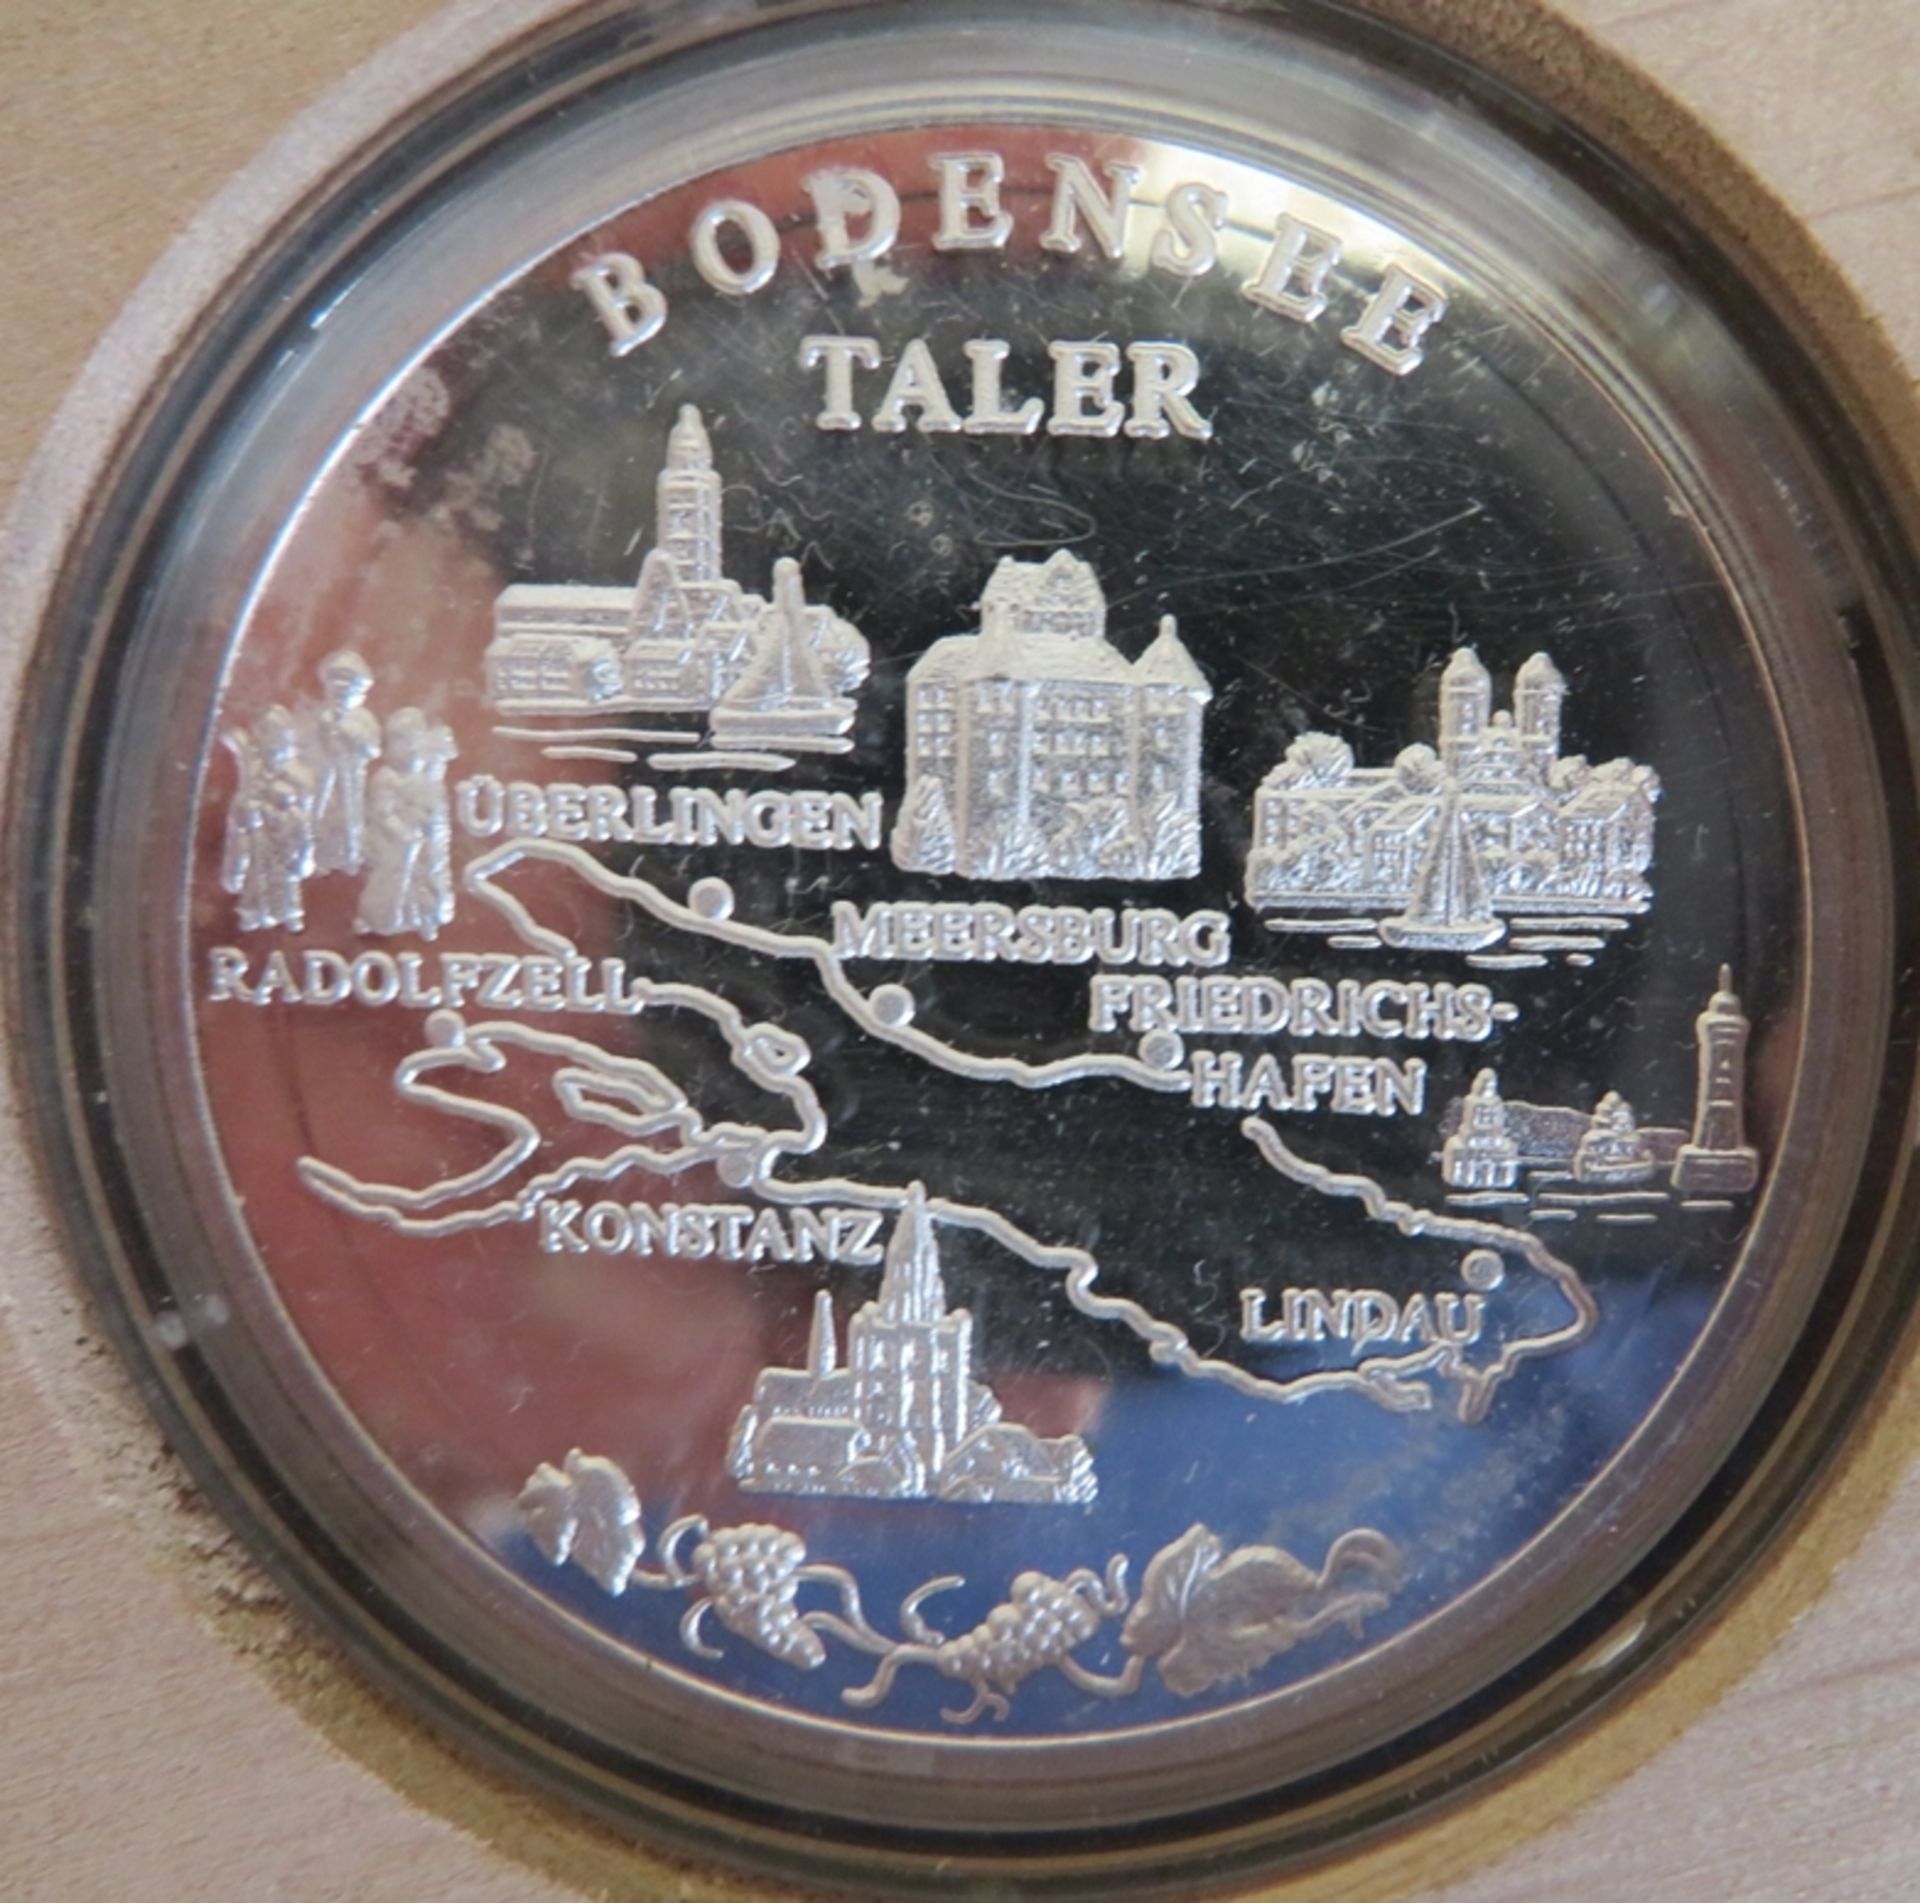 Medaille, Bodensee Thaler, Feinsilber 999/000, punziert, 26 g, PP, Original-Holz-Etui, d 4 cm. - Image 2 of 2